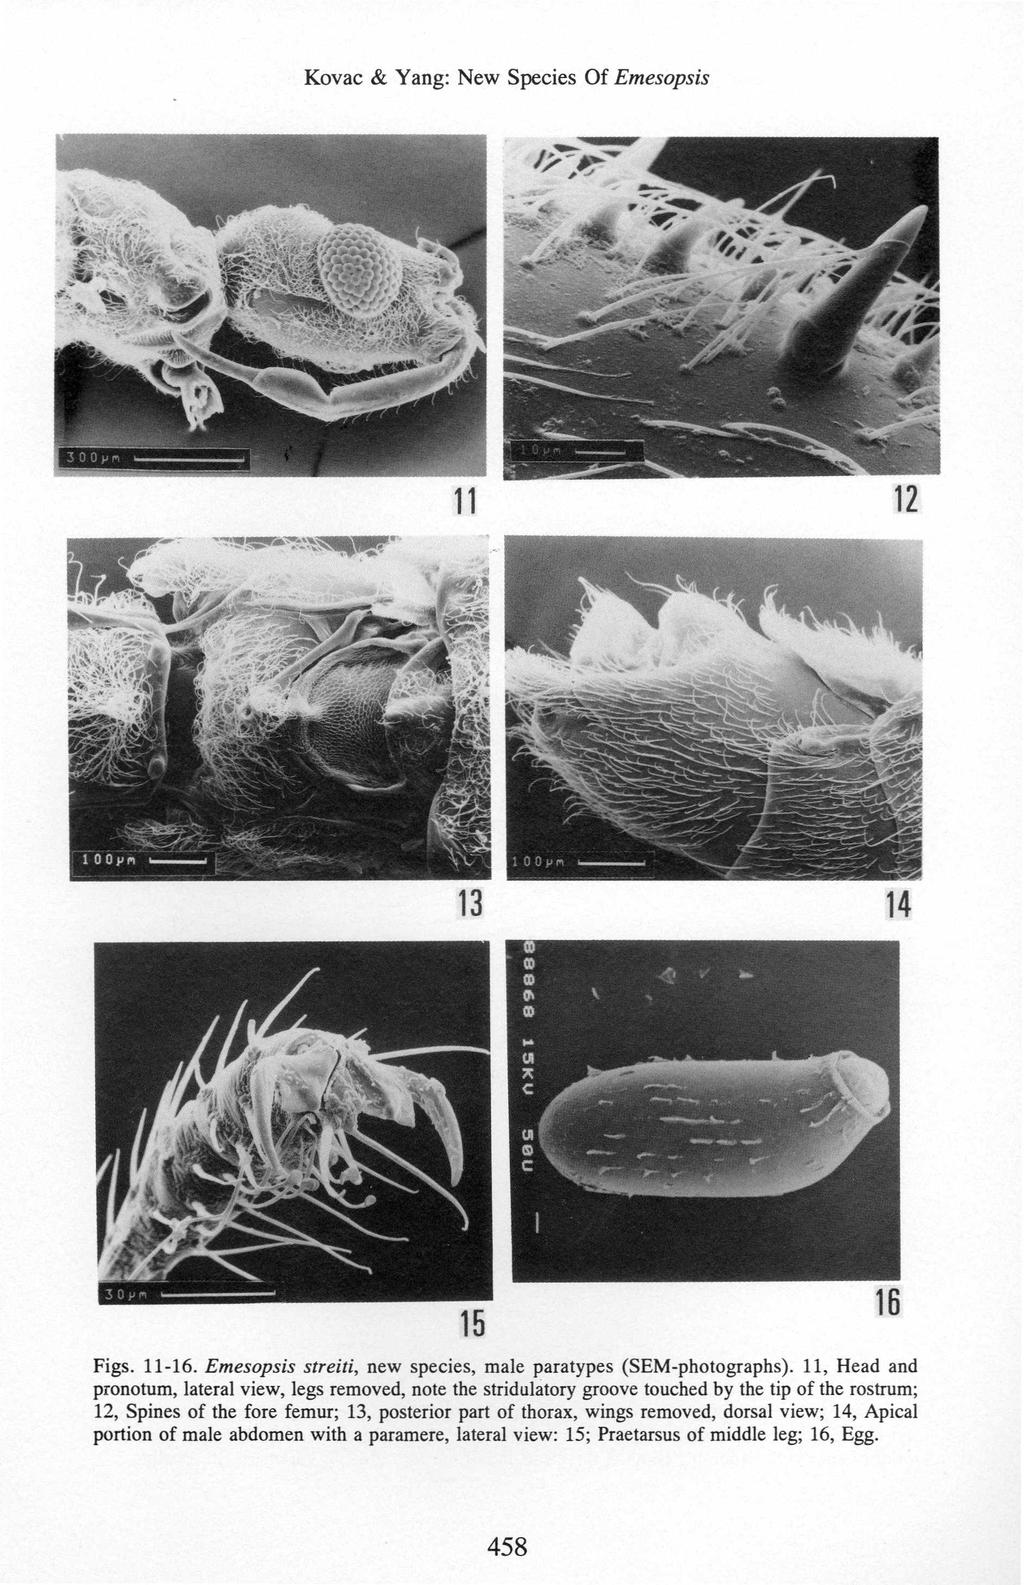 Figs. 11-16. Emesopsis streiti, new species, male paratypes (SEM-photographs).